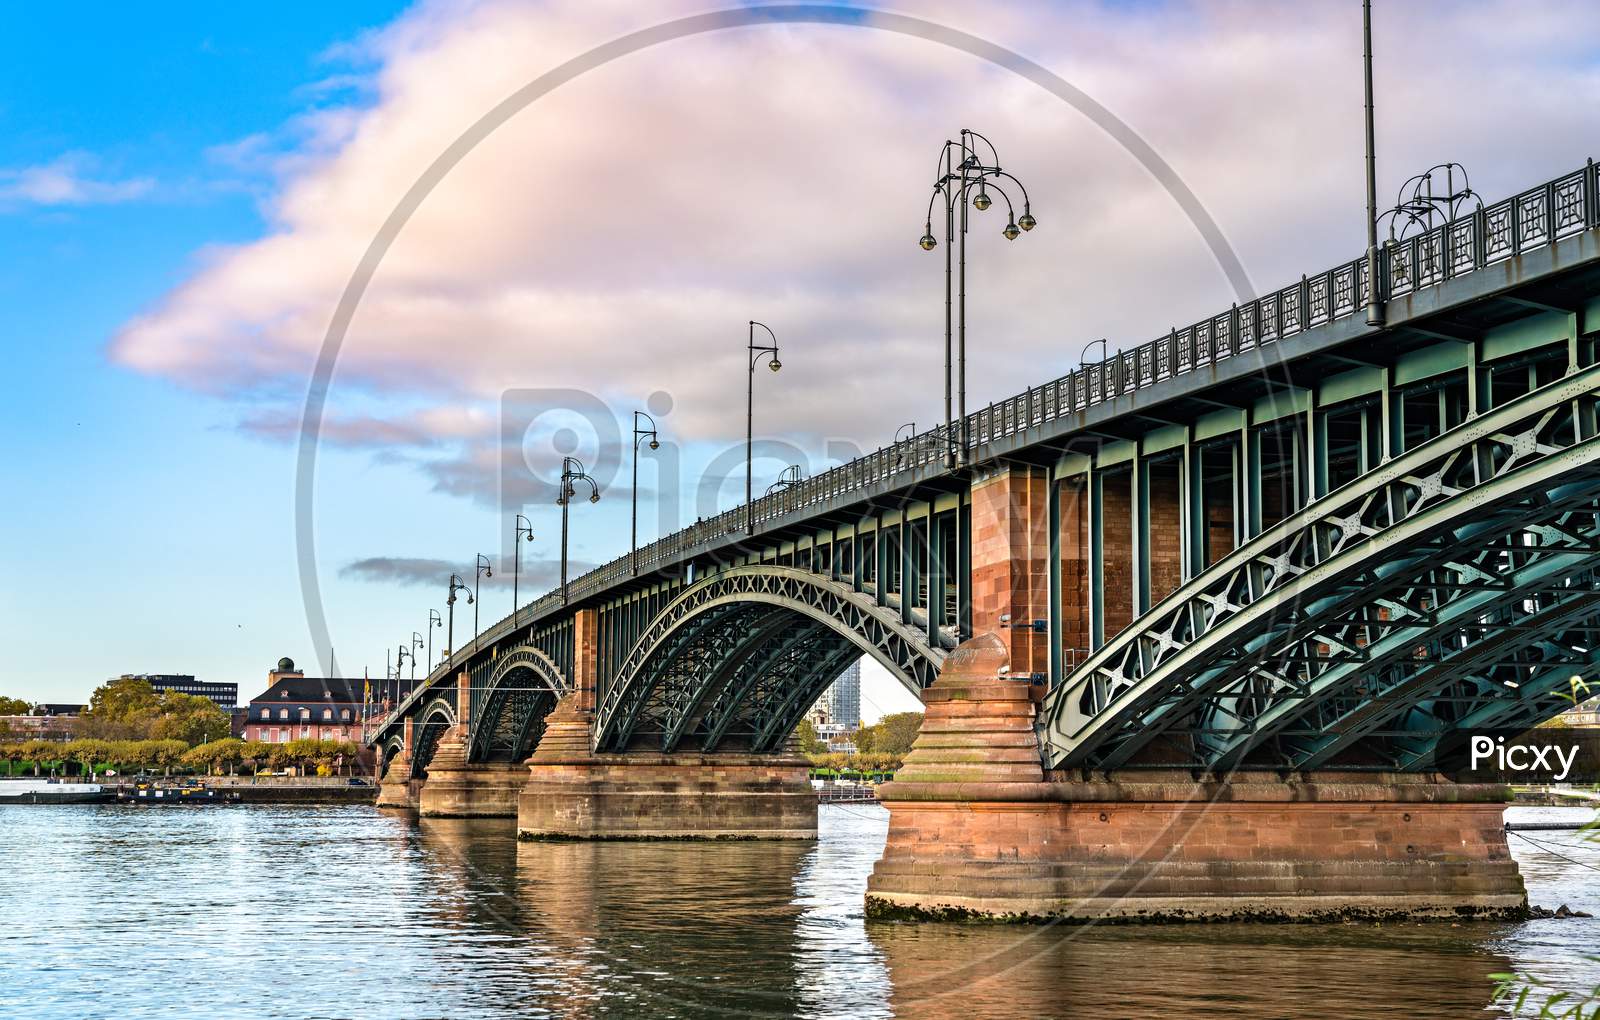 The Theodor Heuss Bridge Over The Rhine River In Germany